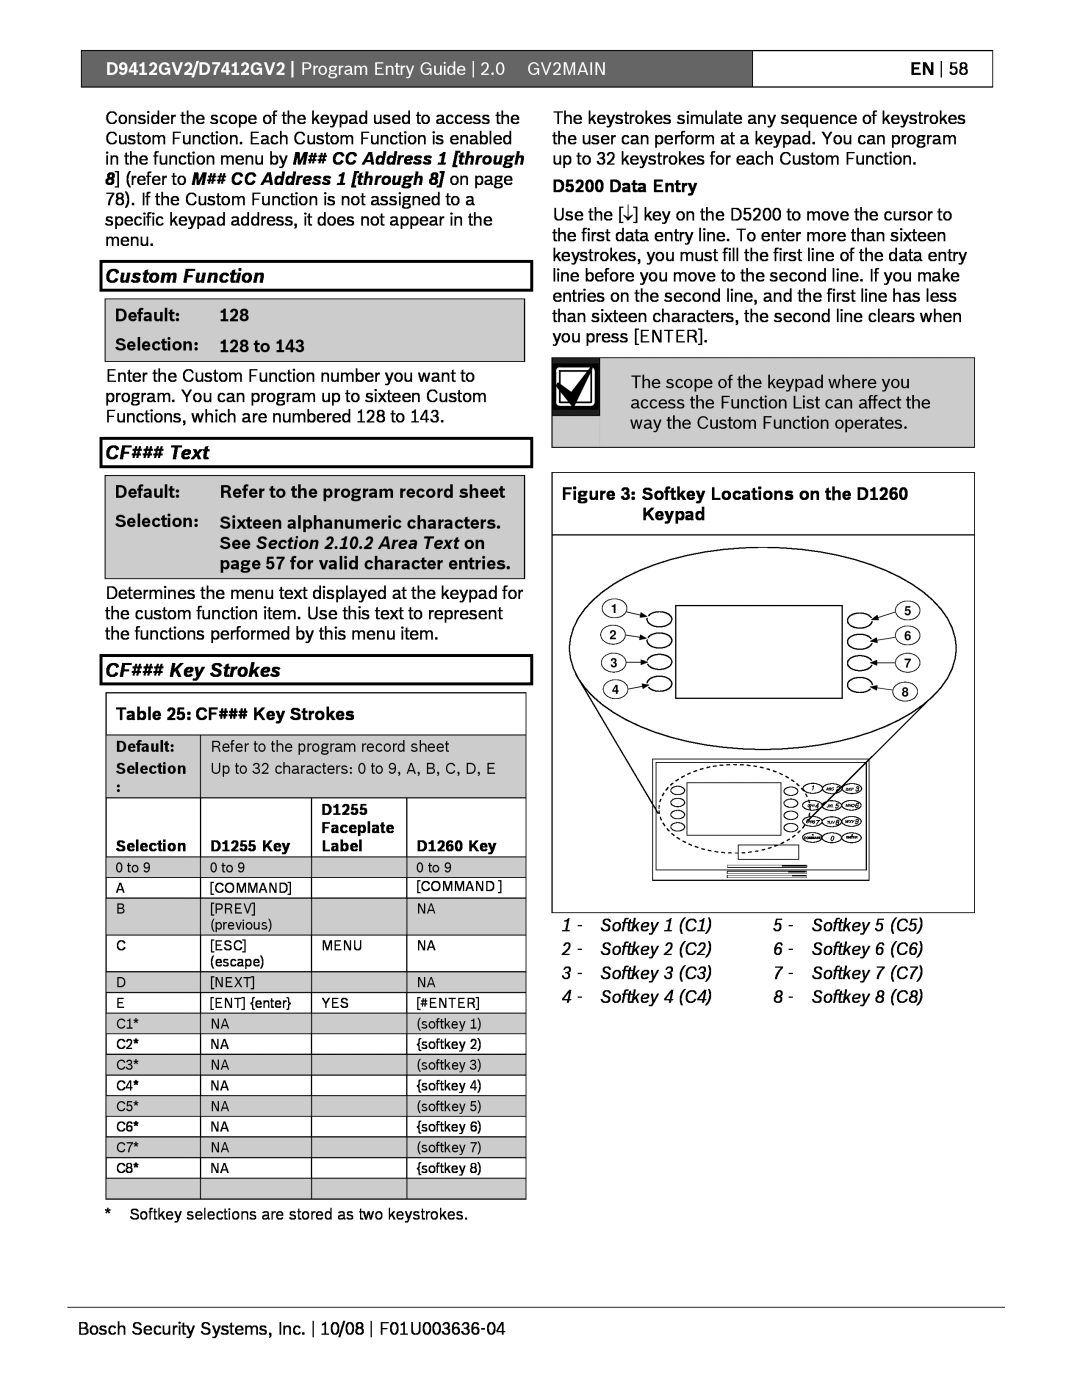 Bosch Appliances D9412GV2 Custom Function, CF### Text, CF### Key Strokes, See .10.2 Area Text on, Keypad, Softkey 1 C1 